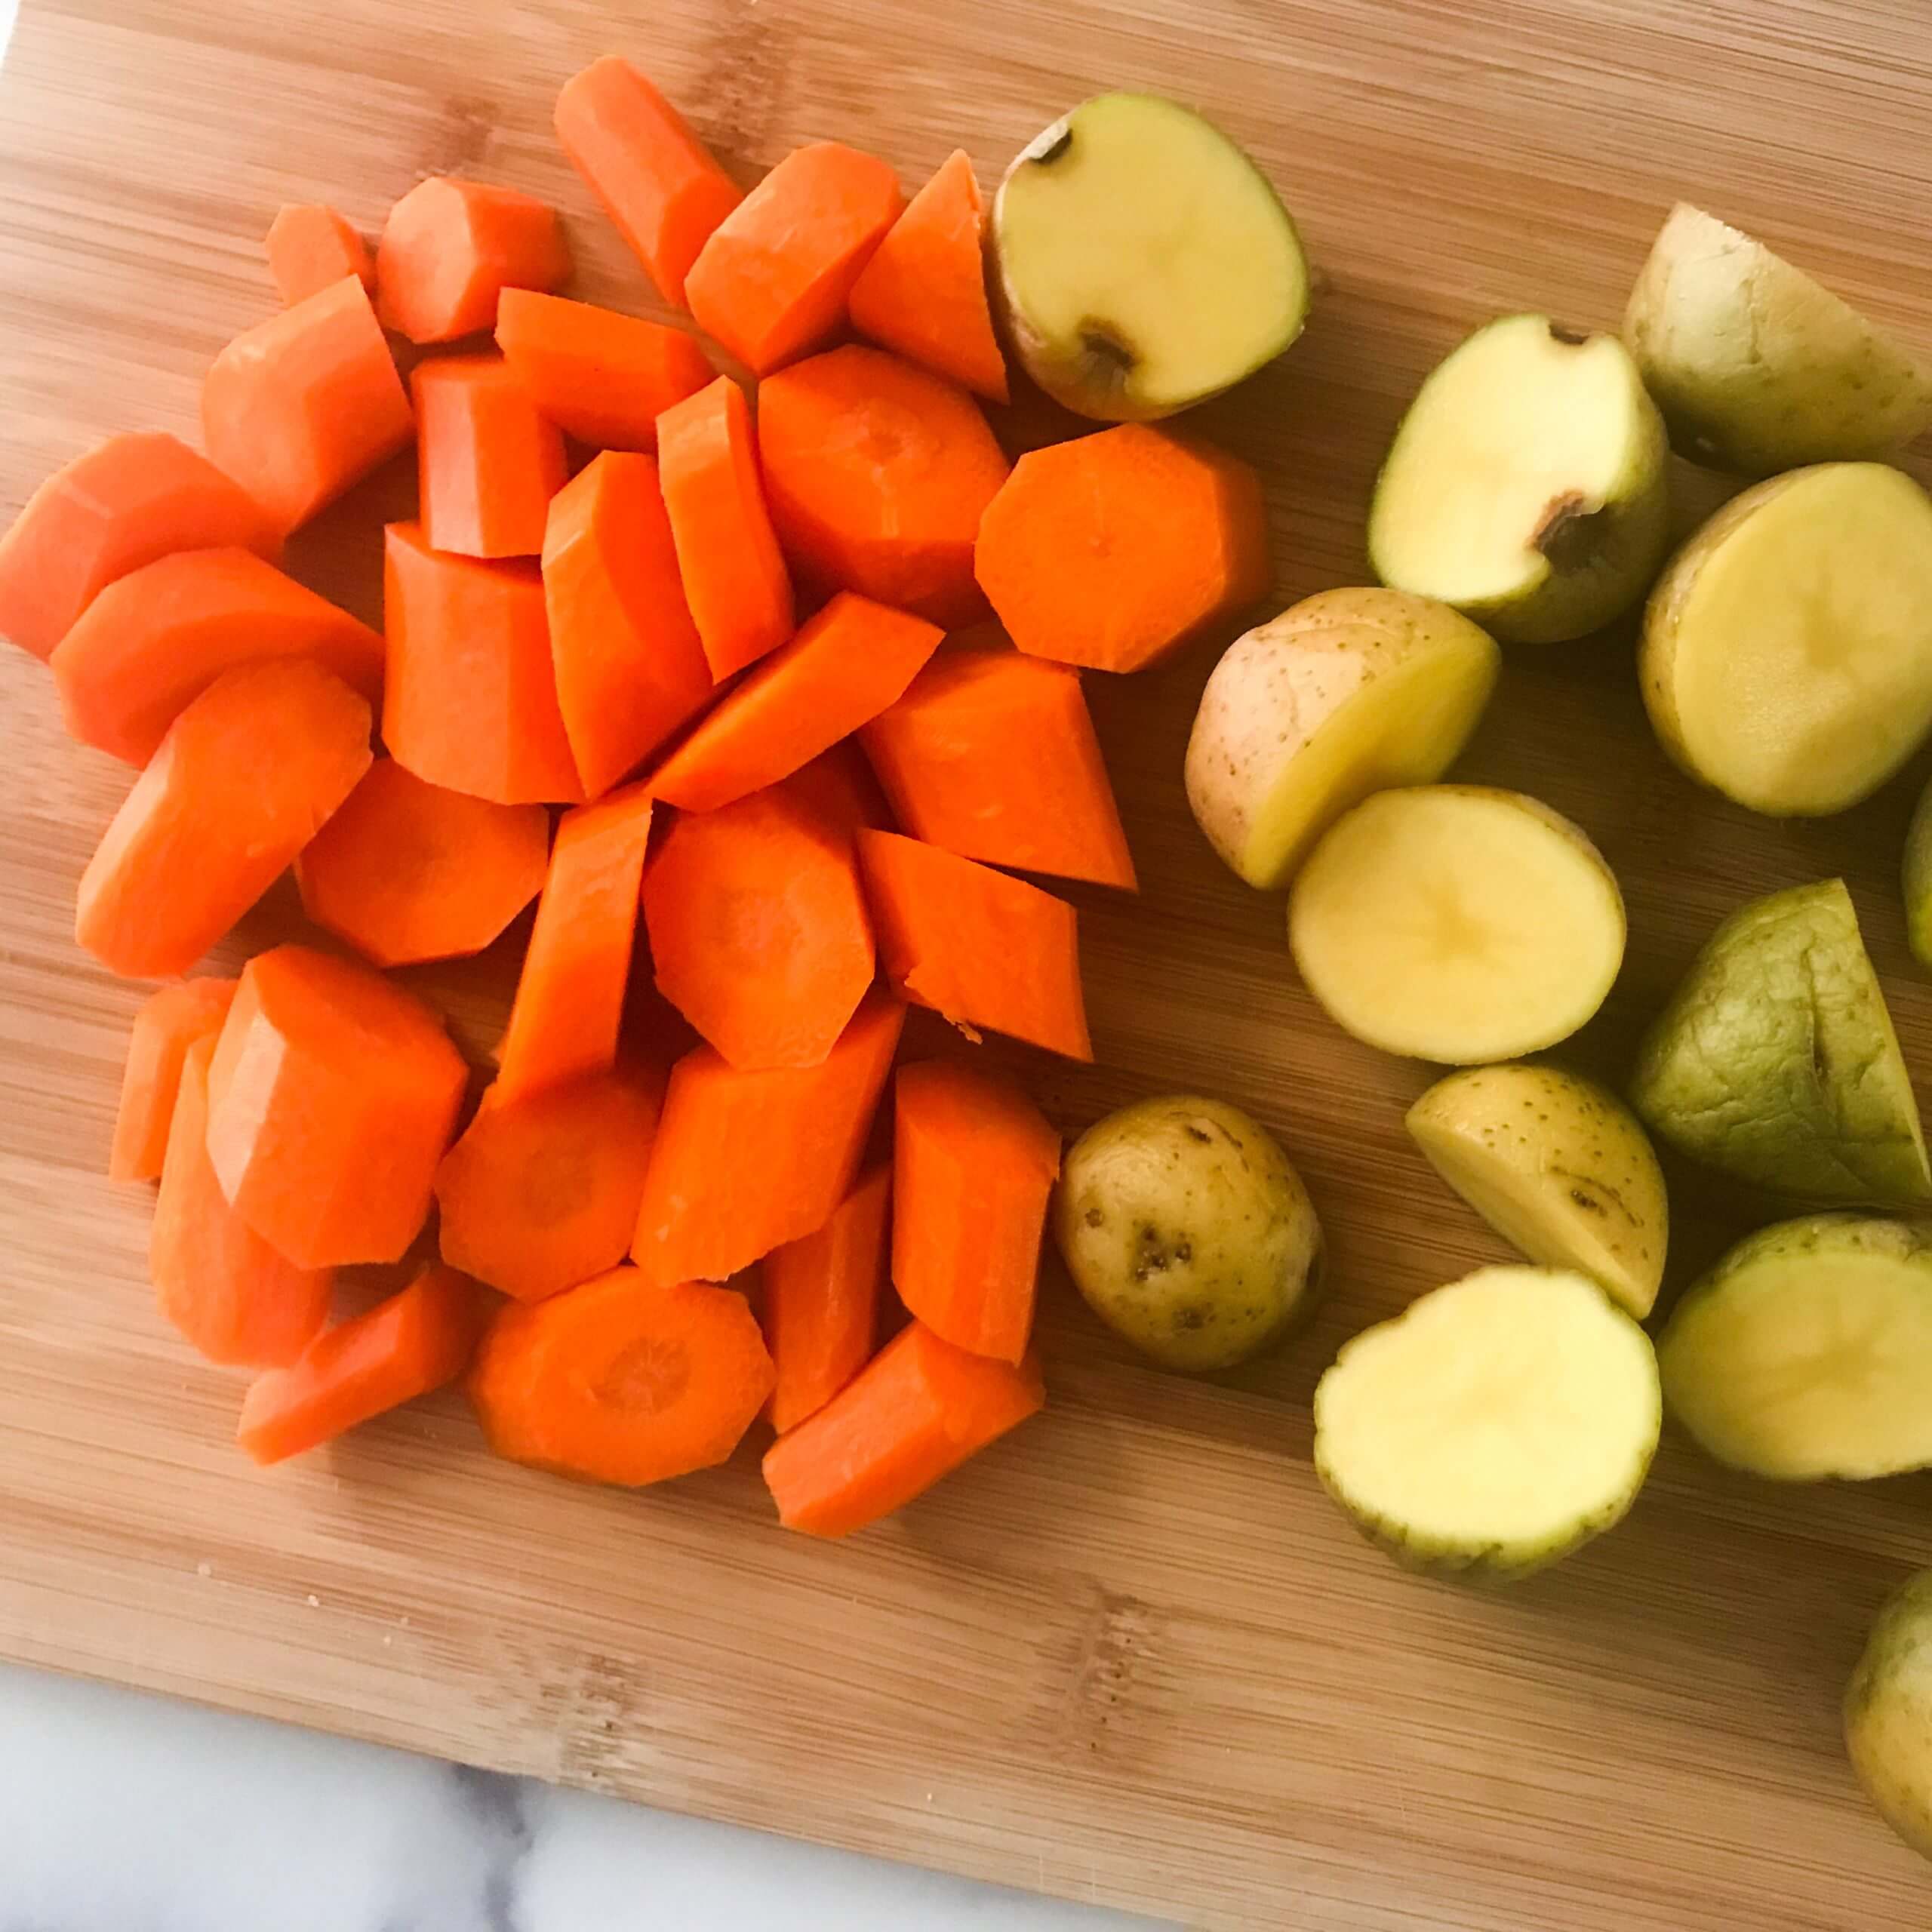 chopped carrots and potatoe | My Curated Tastes